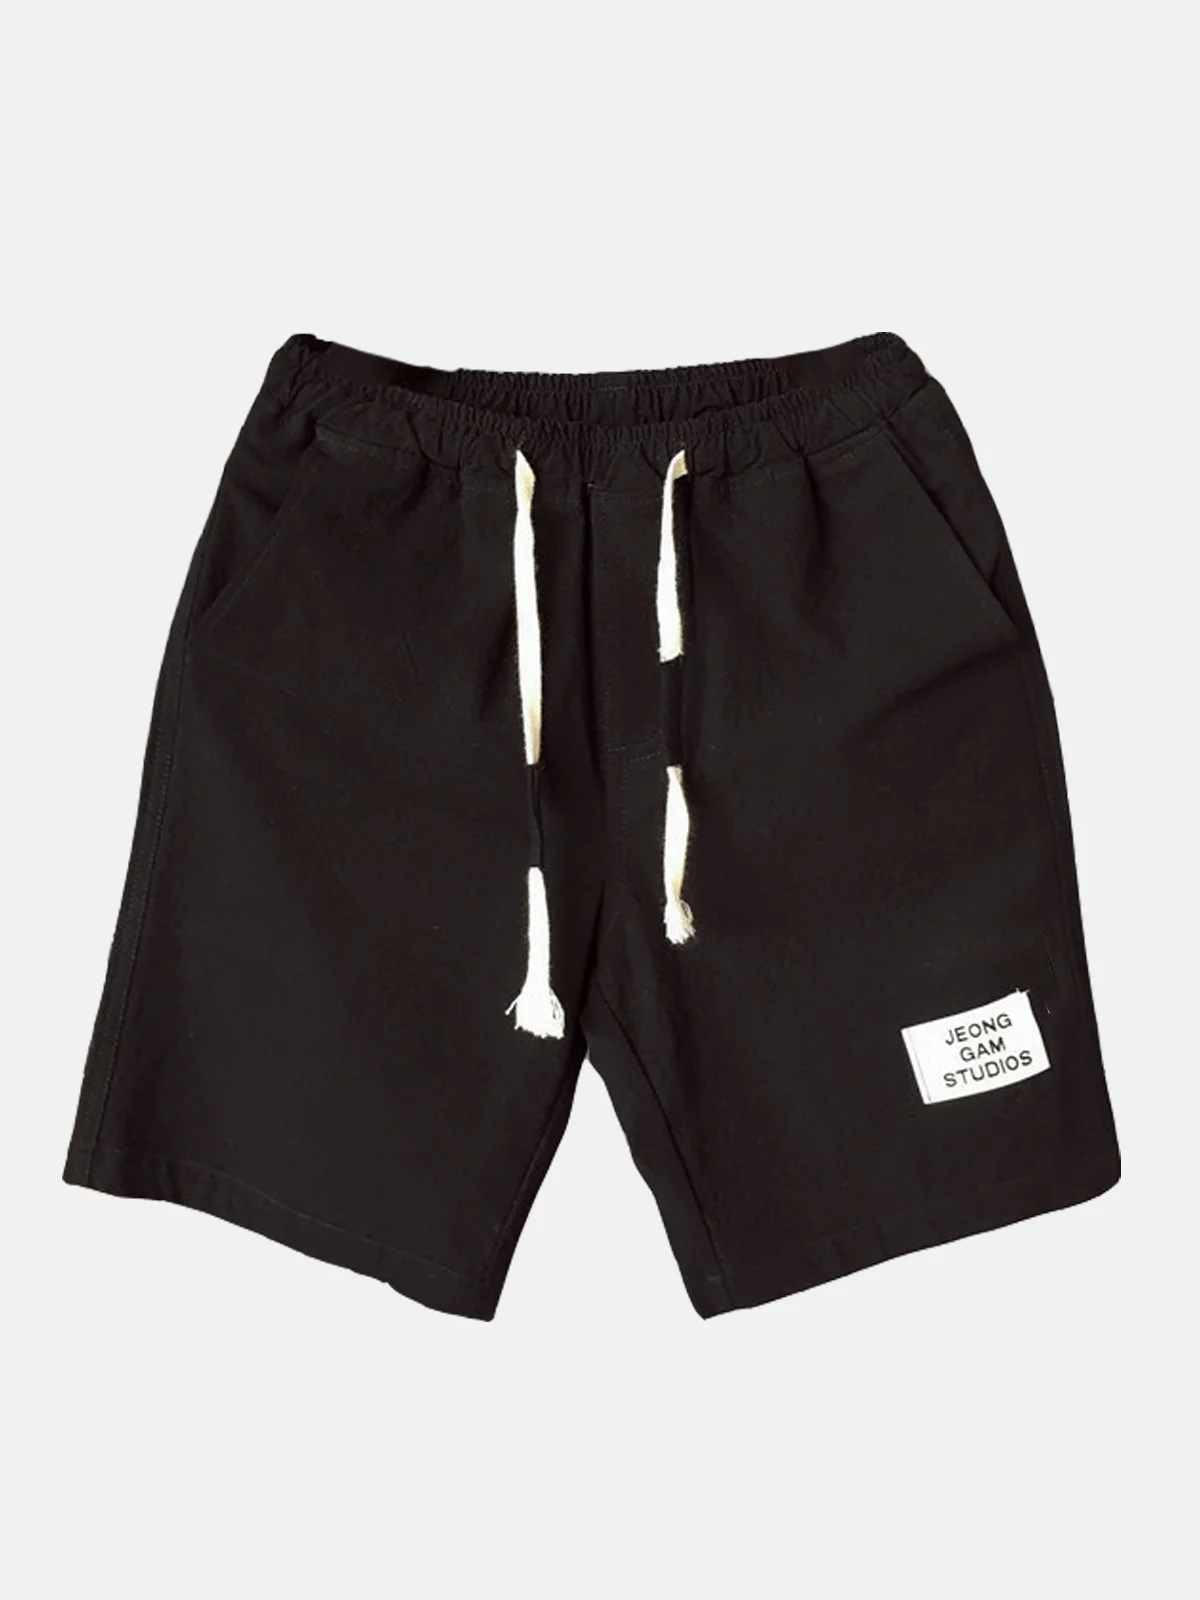 Royaura Beach Vacation Retro Casual Men's Natural Fiber Blend Shorts